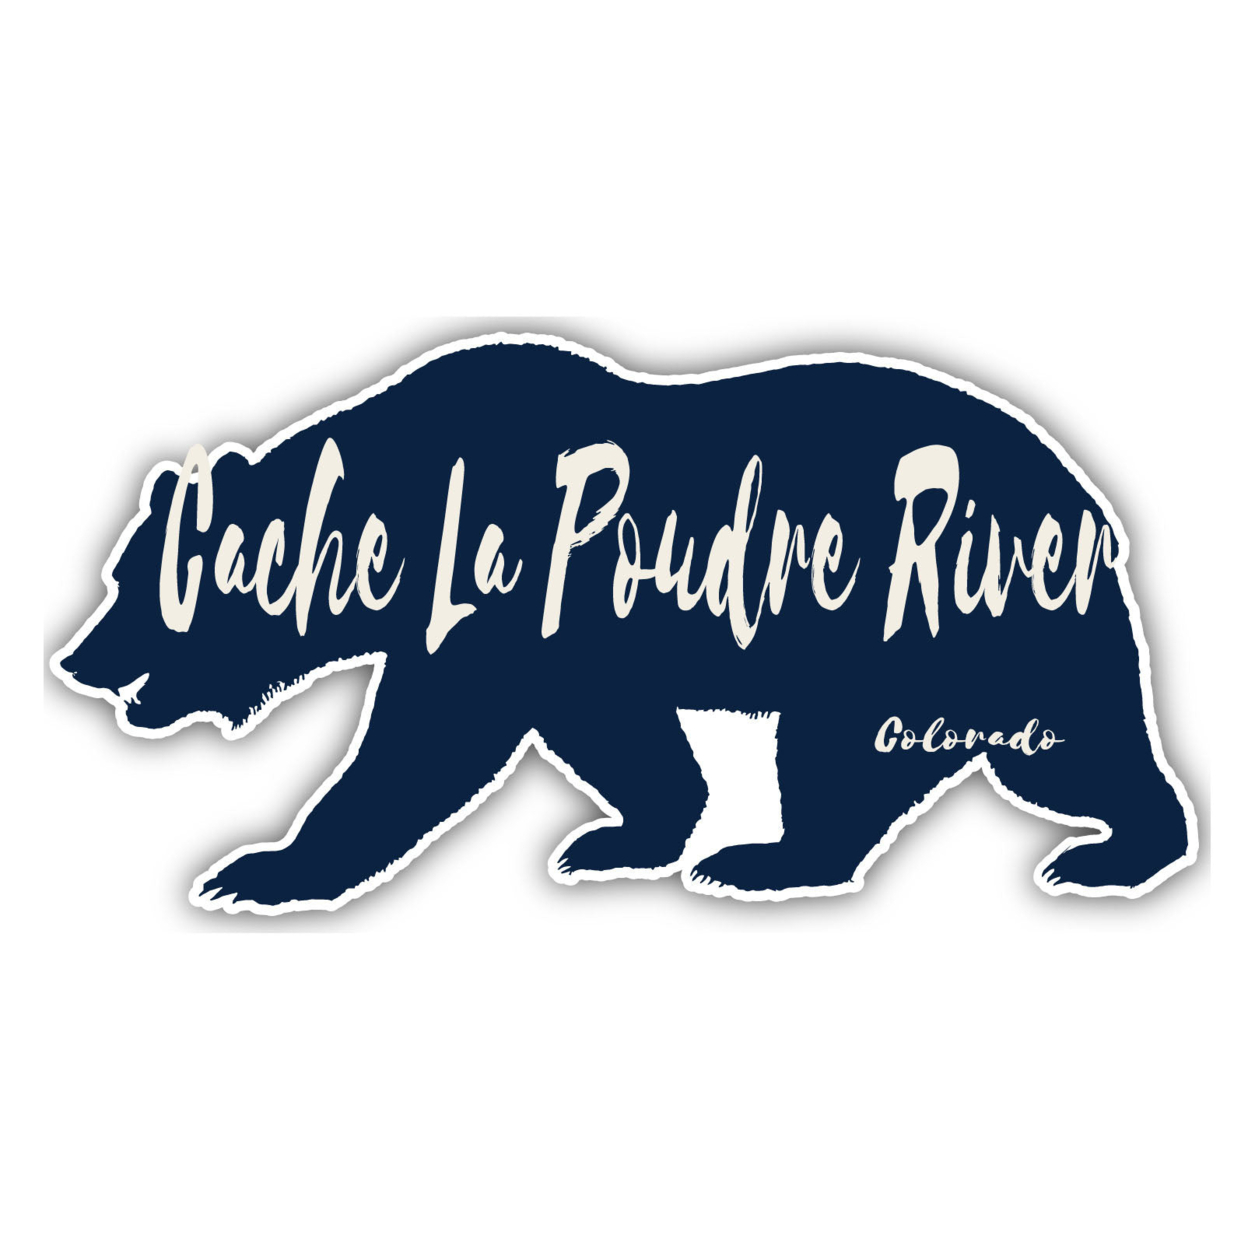 Cache La Poudre River Colorado Souvenir Decorative Stickers (Choose Theme And Size) - Single Unit, 2-Inch, Bear